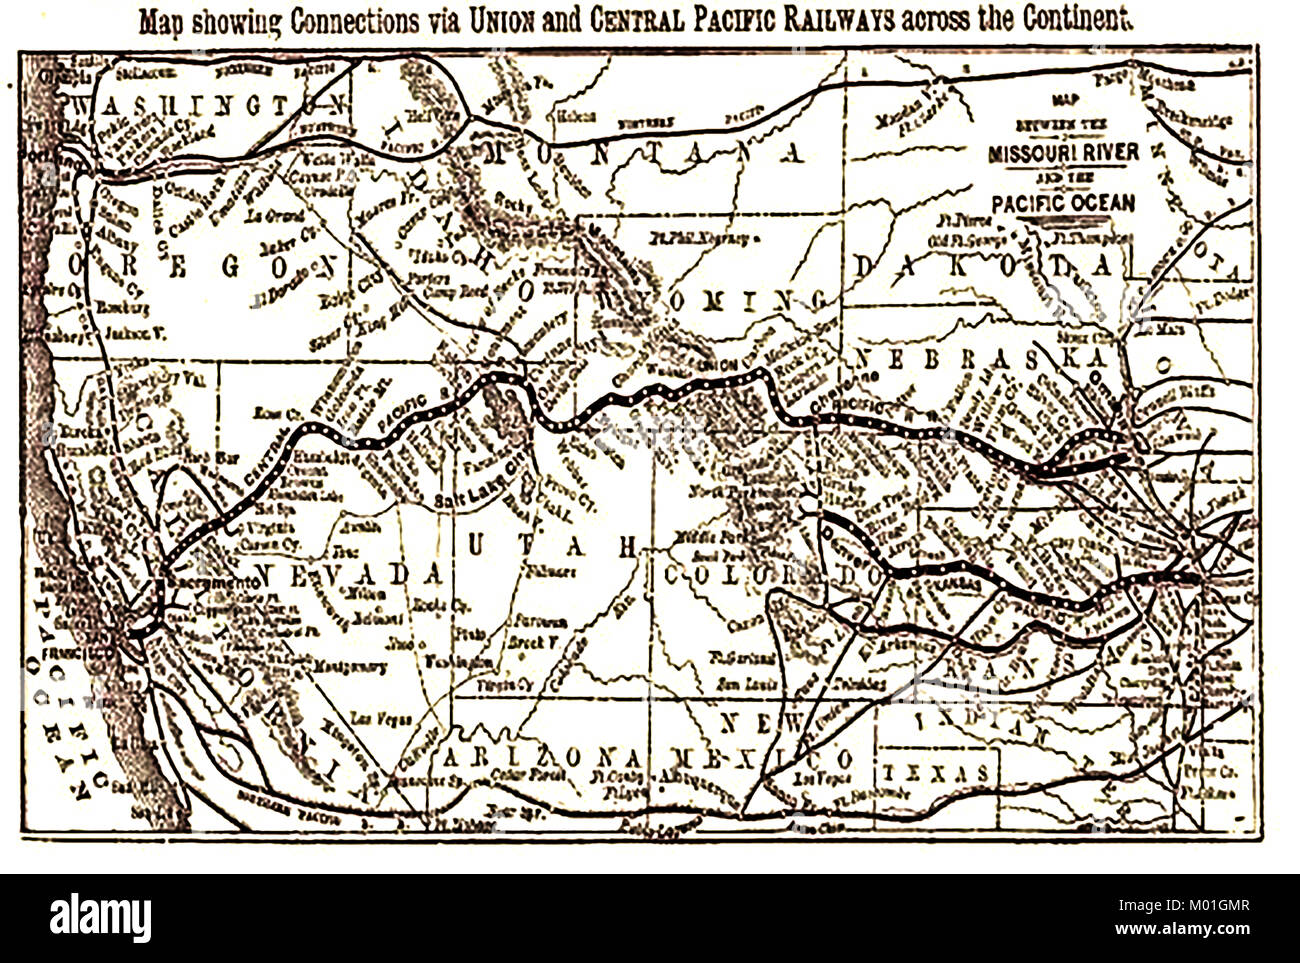 Lake Shore and Michigan Southern Eisenbahn Karte USA-Union Central Pacific Eisenbahn Verbindungen 1875 Stockfoto